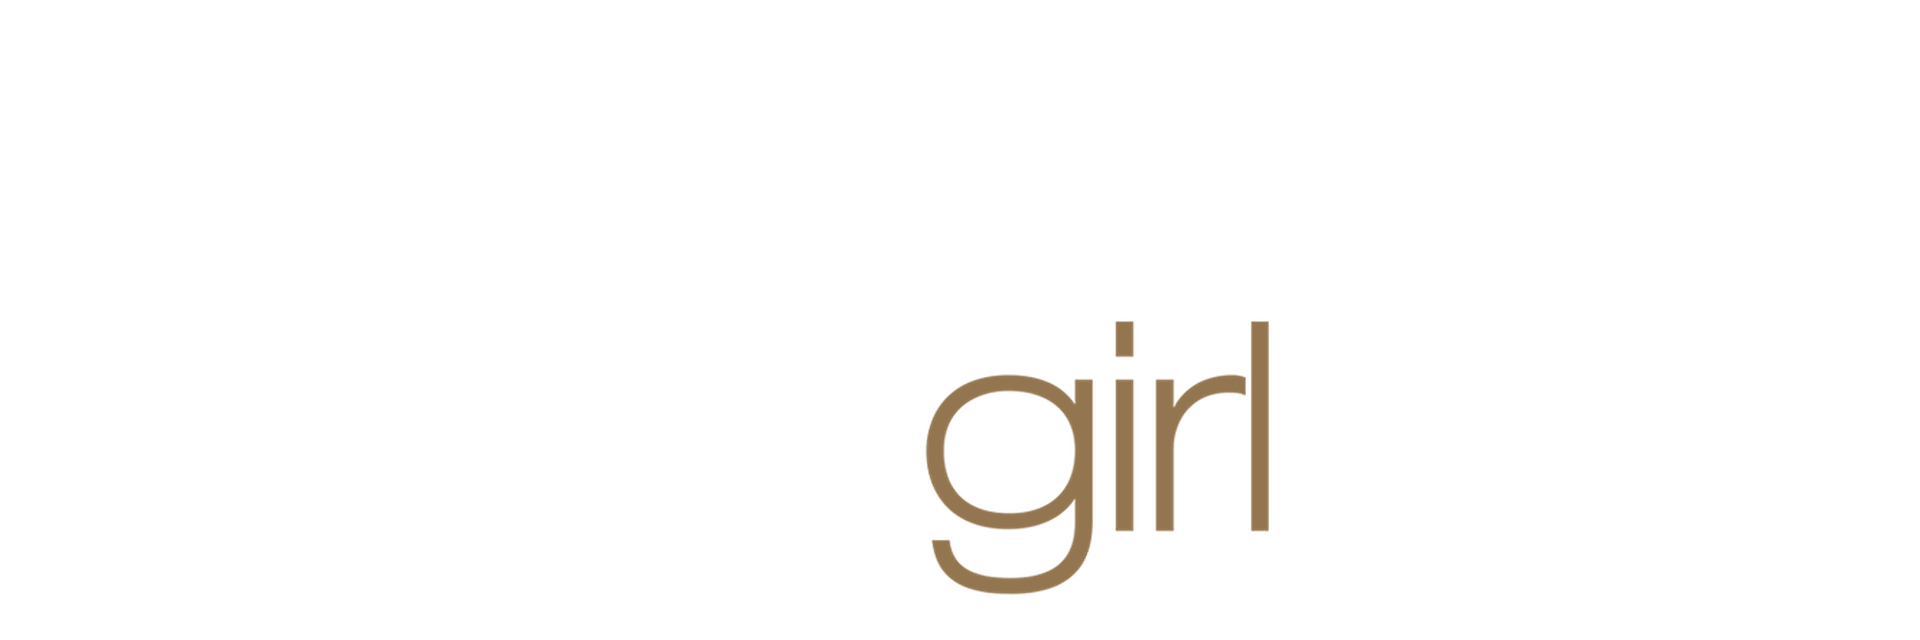 Gossip Girl Season 1 Ep 7 Victor/Victrola, Watch TV Online